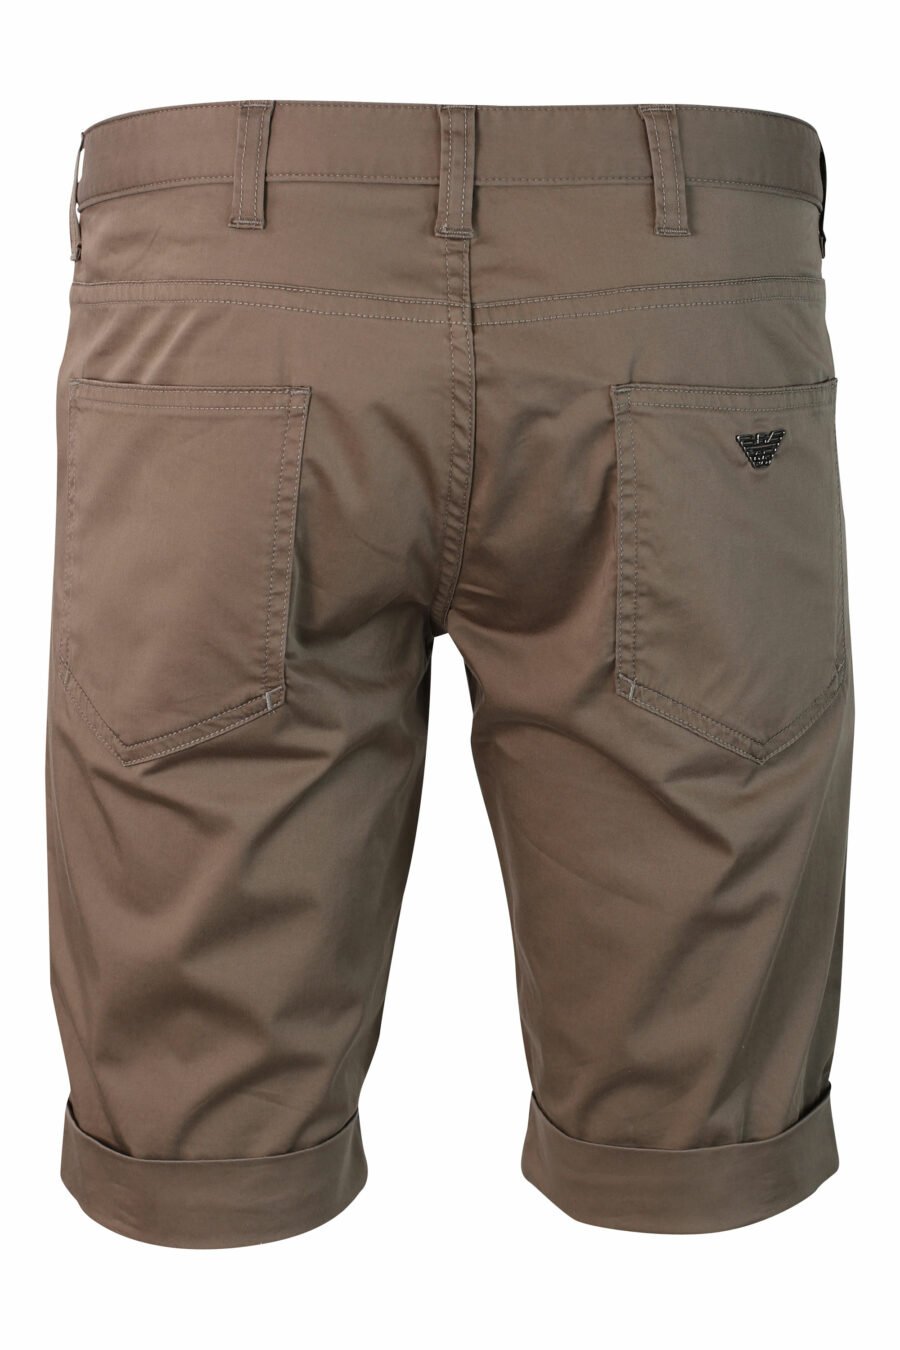 Pantalón corto beige con minilogo - IMG 9905 1